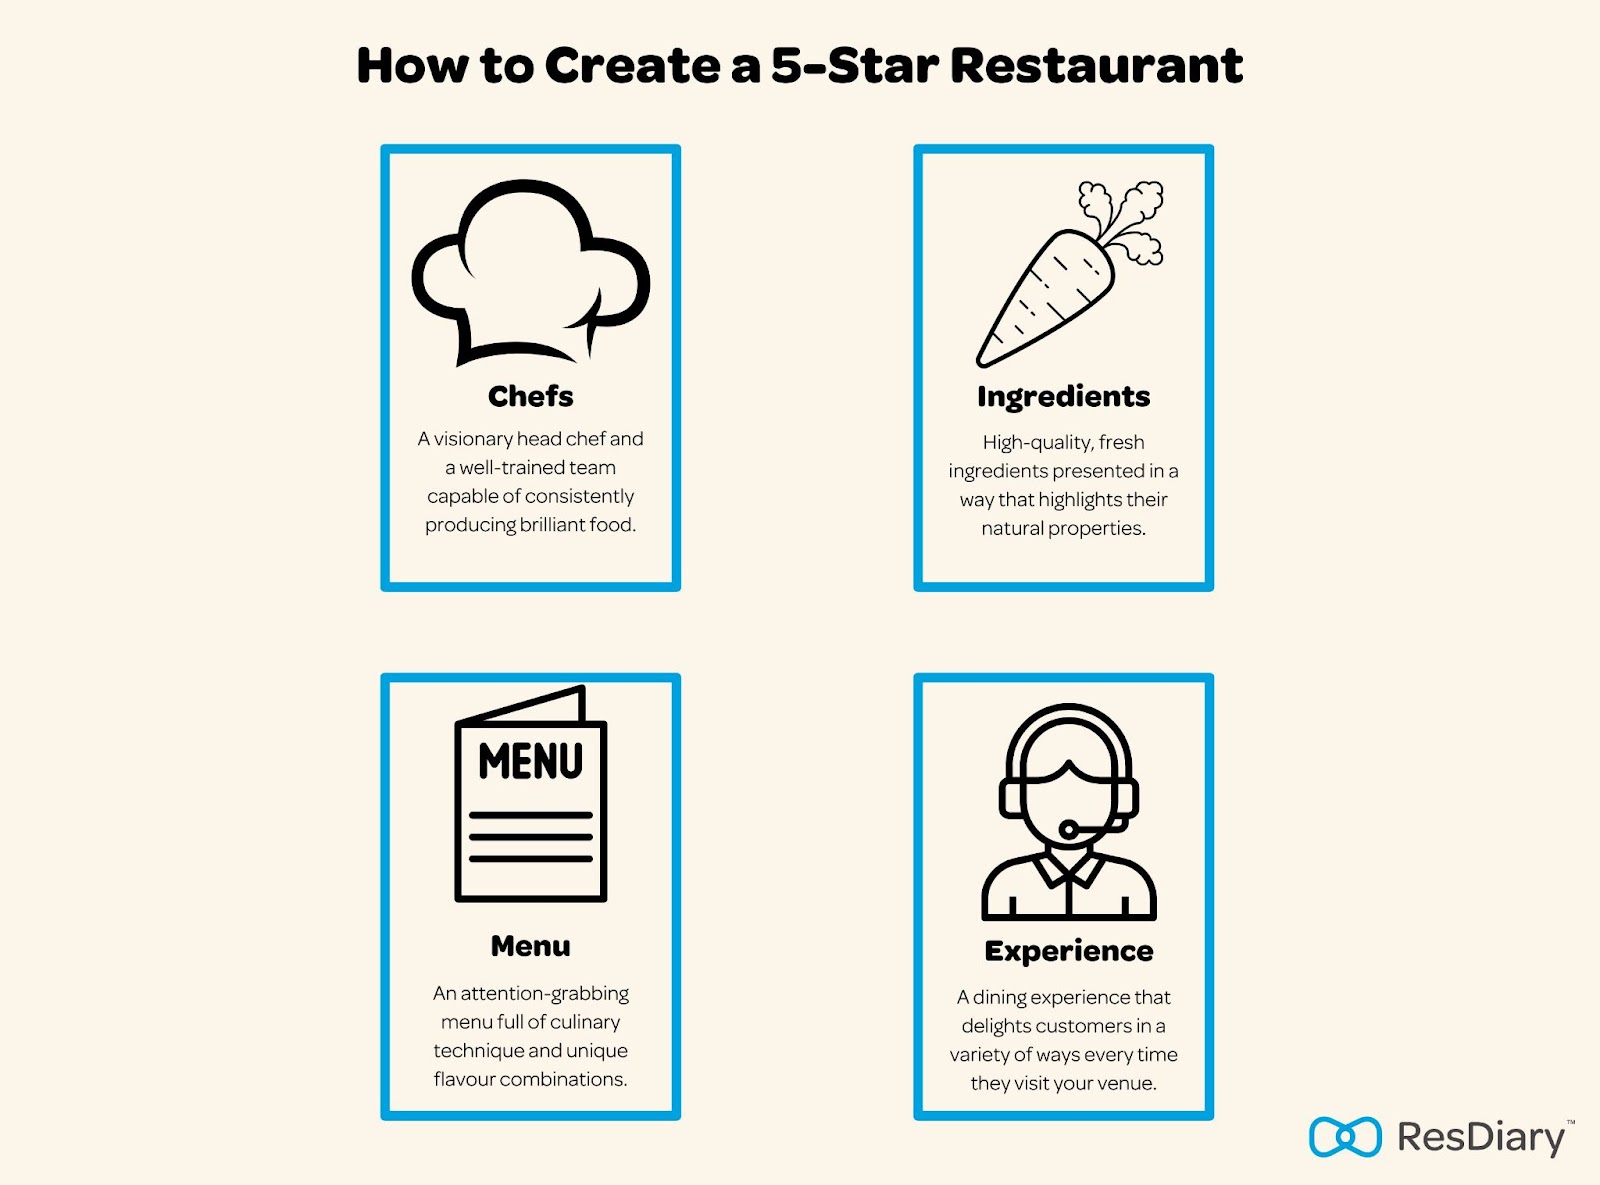 What makes a restaurant 5-star?